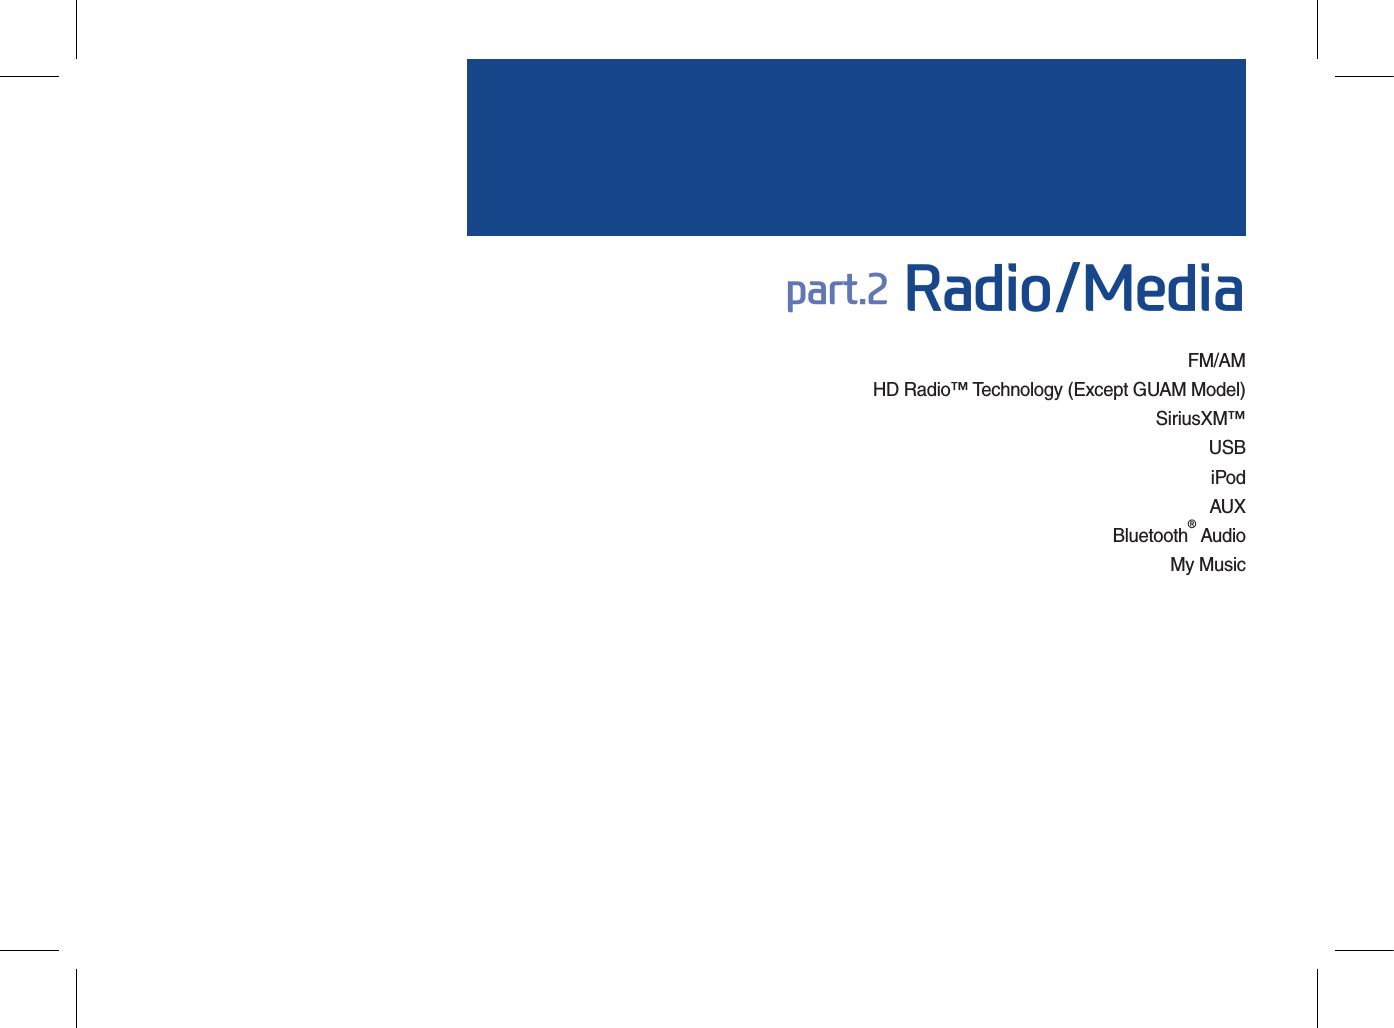 FM/AM HD Radio™ Technology (Except GUAM Model)SiriusXM™ USB iPodAUXBluetooth® AudioMy Musicpart.2 Radio/Media